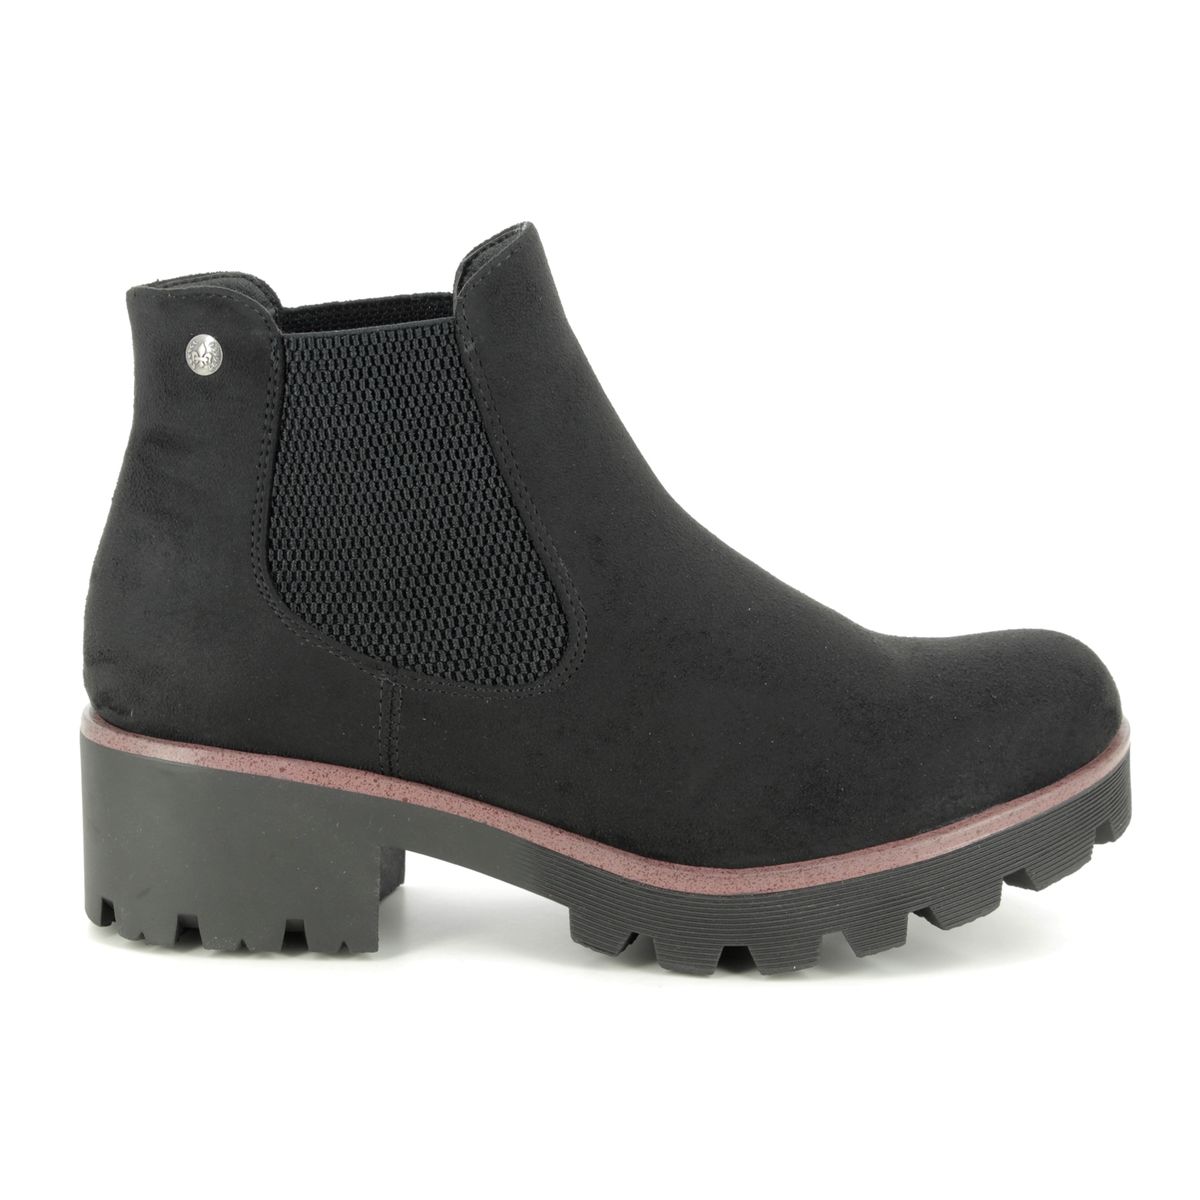 99284-00 Black Boots